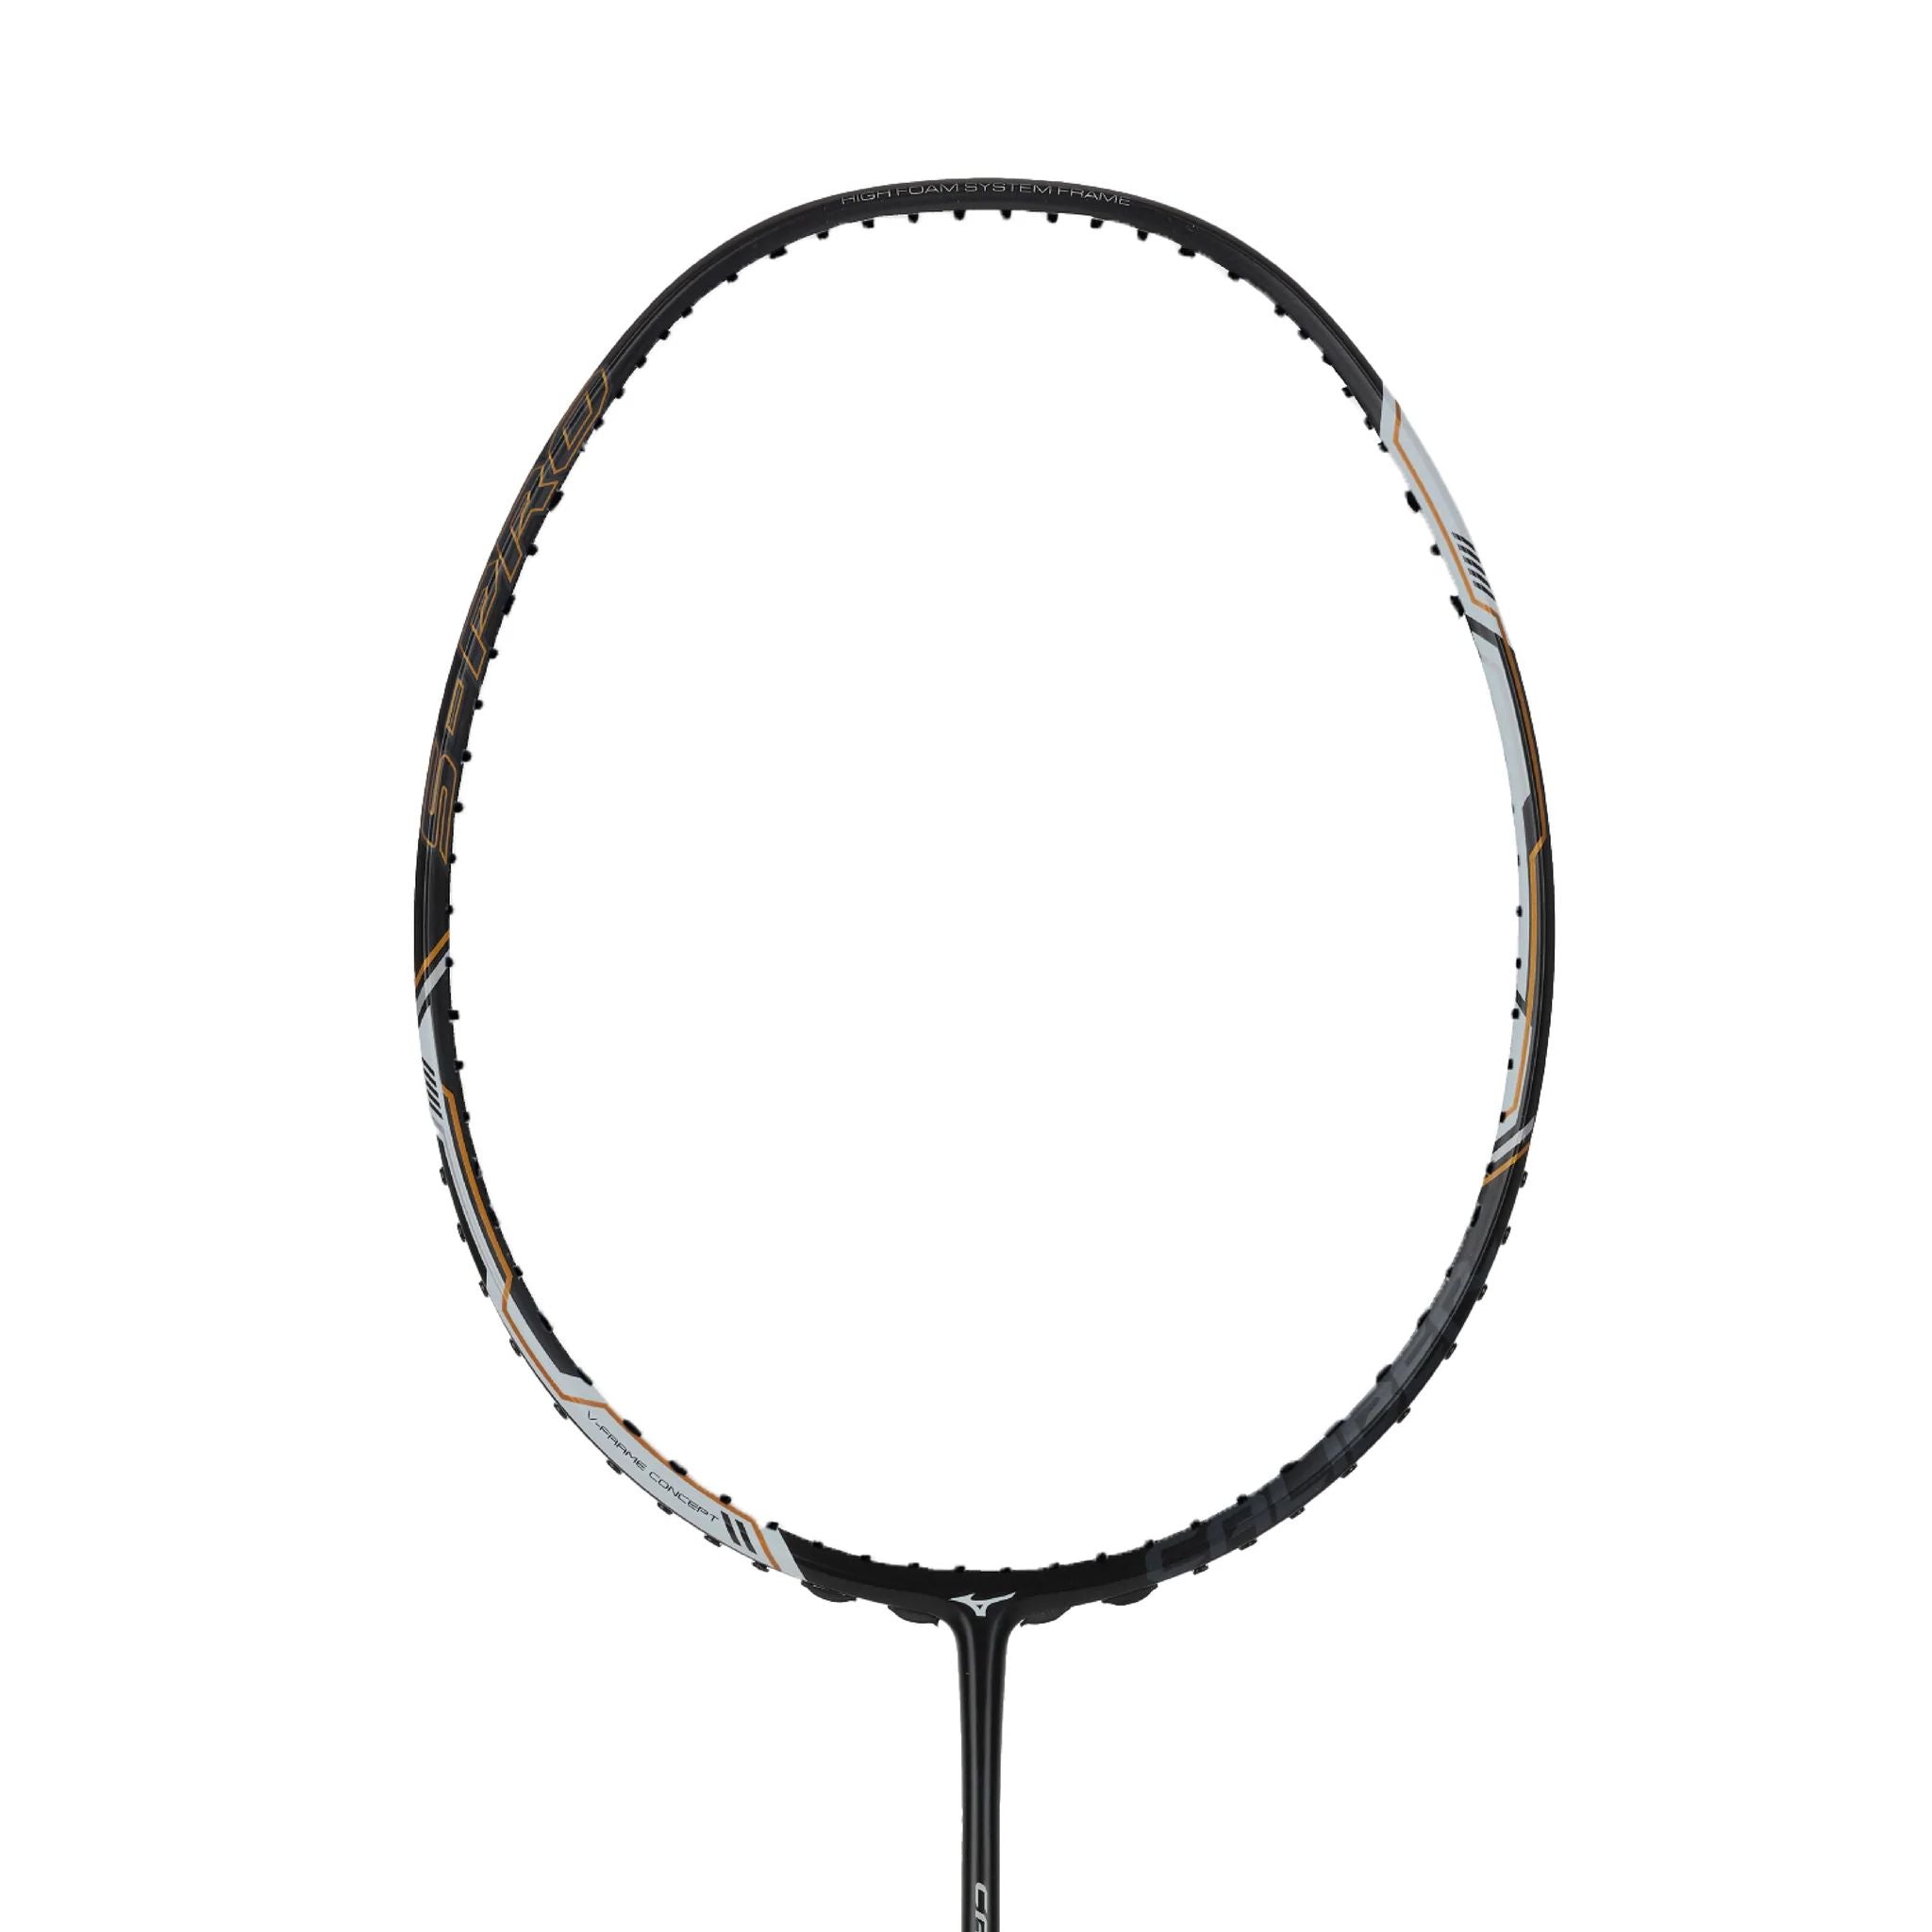 Mizuno Caliber S-Pro Badminton Racket